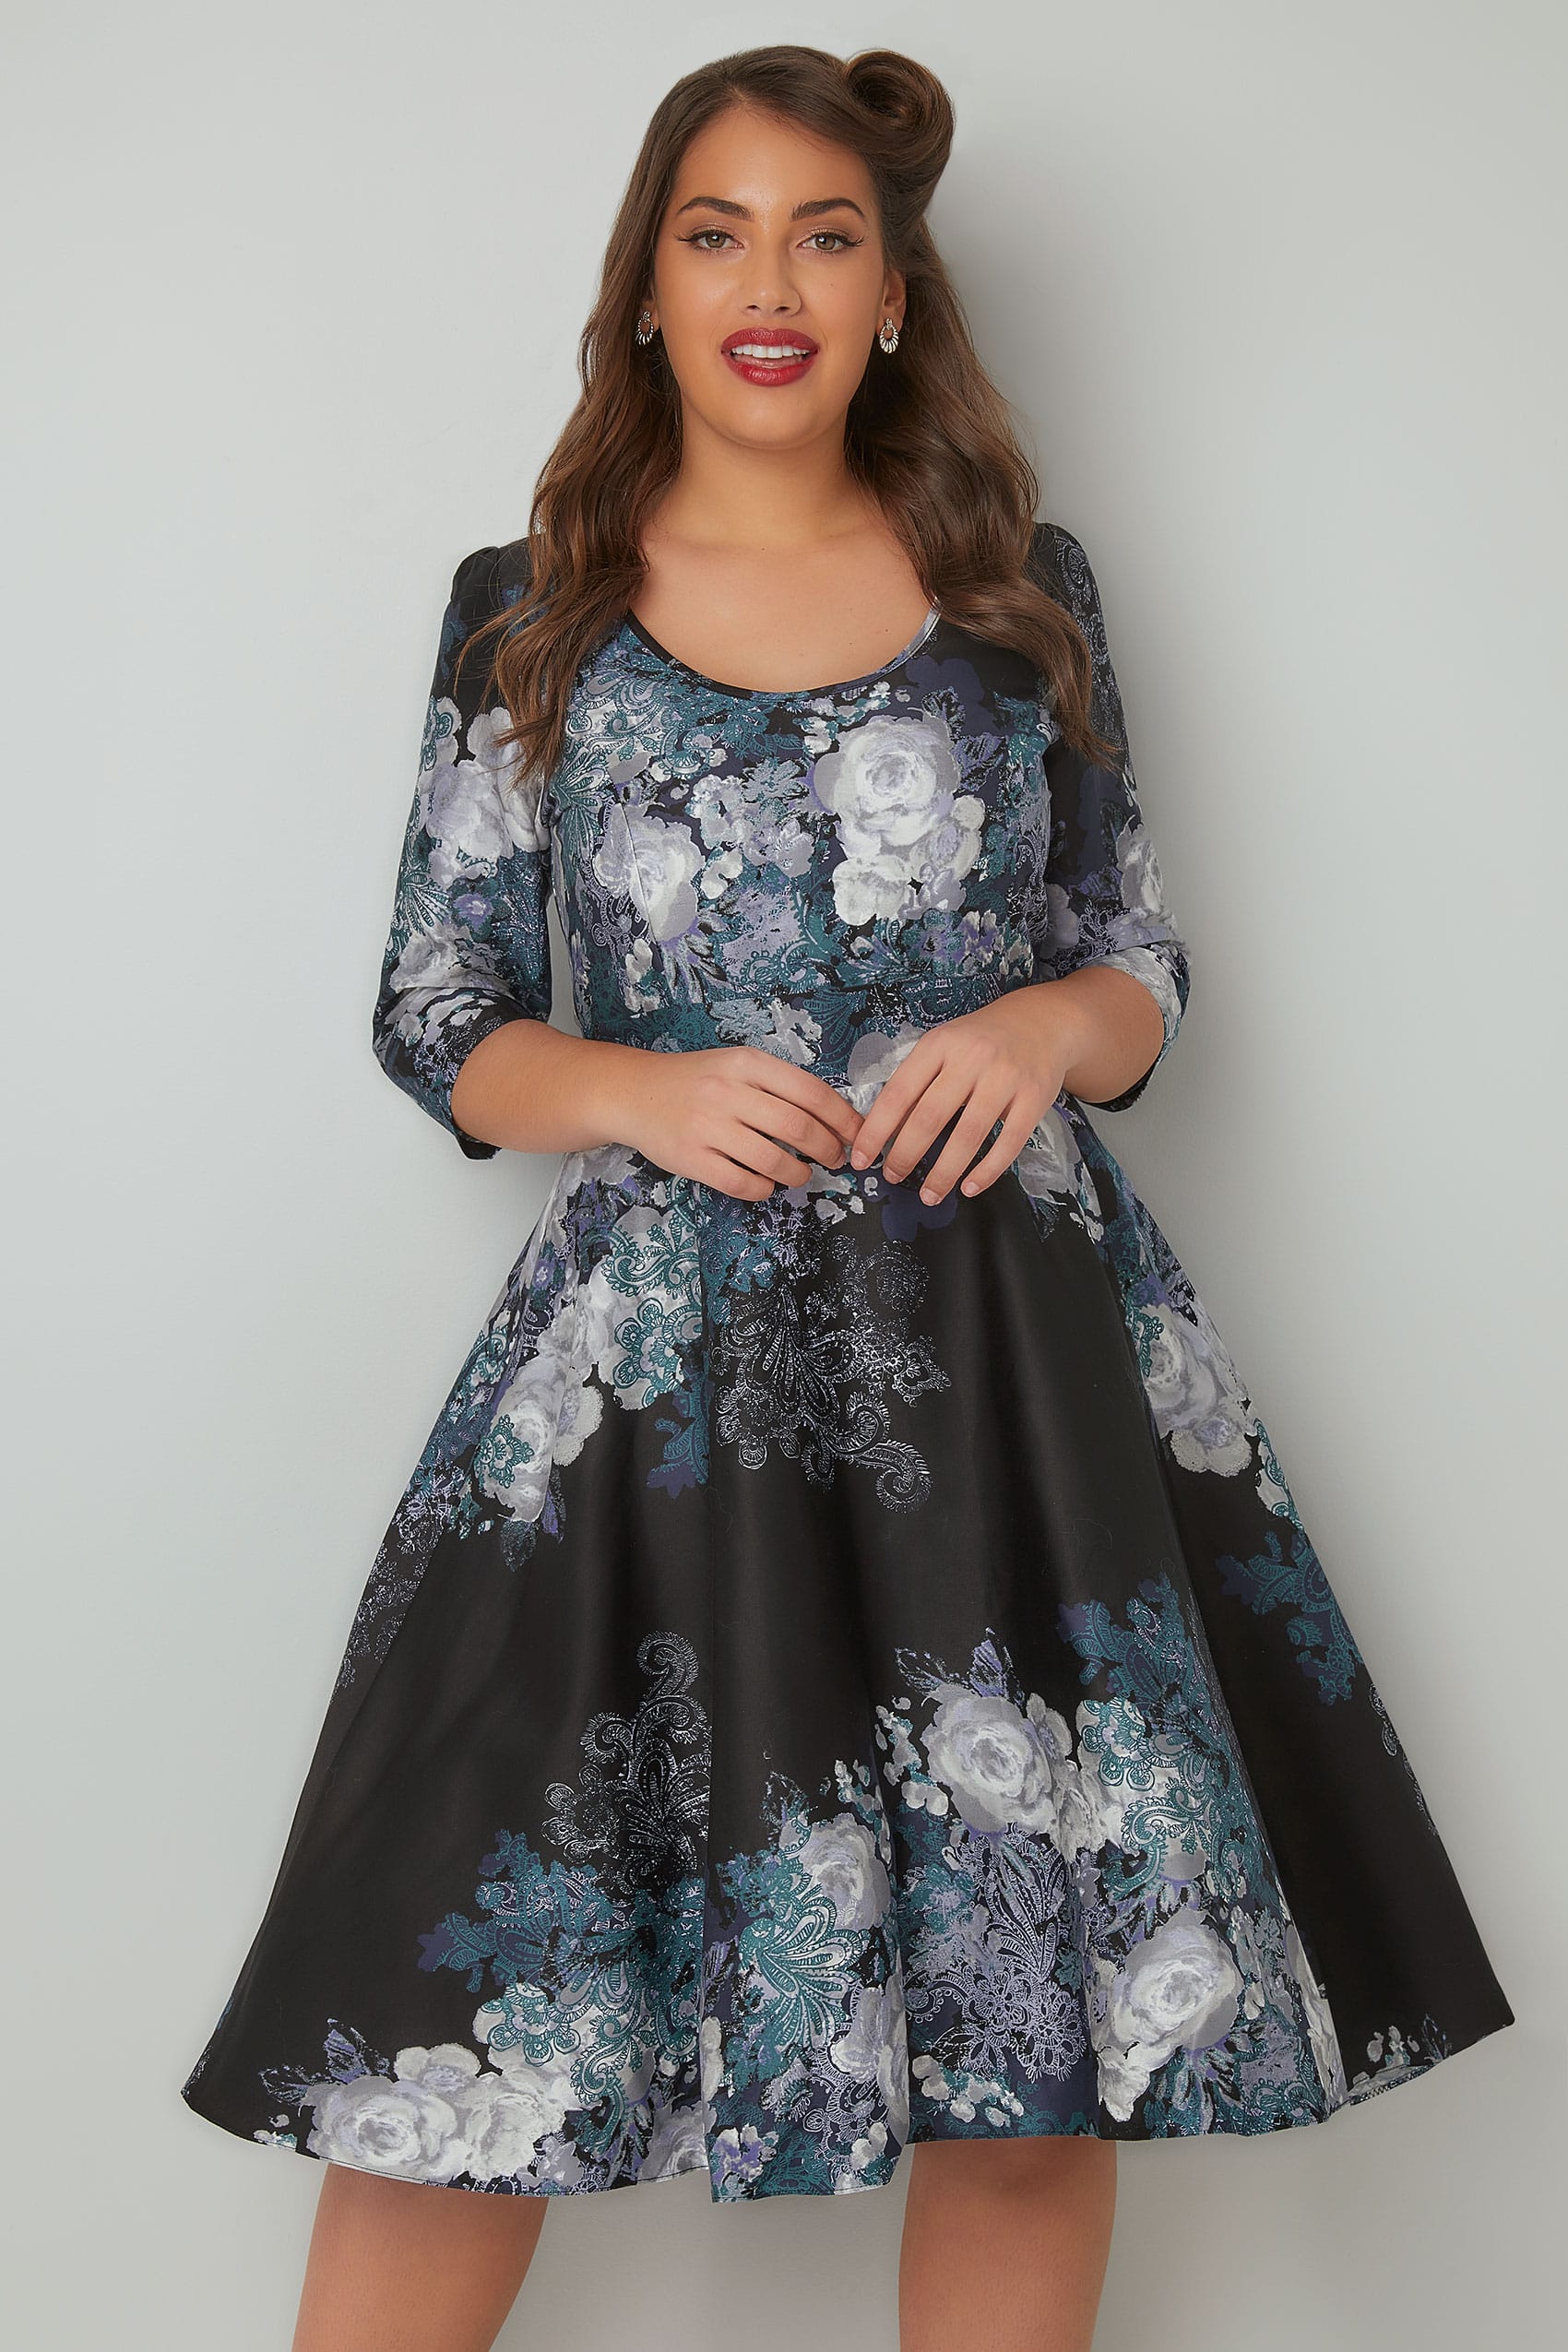 LADY VOLUPTUOUS Black & Navy Floral Paisley Print Dress